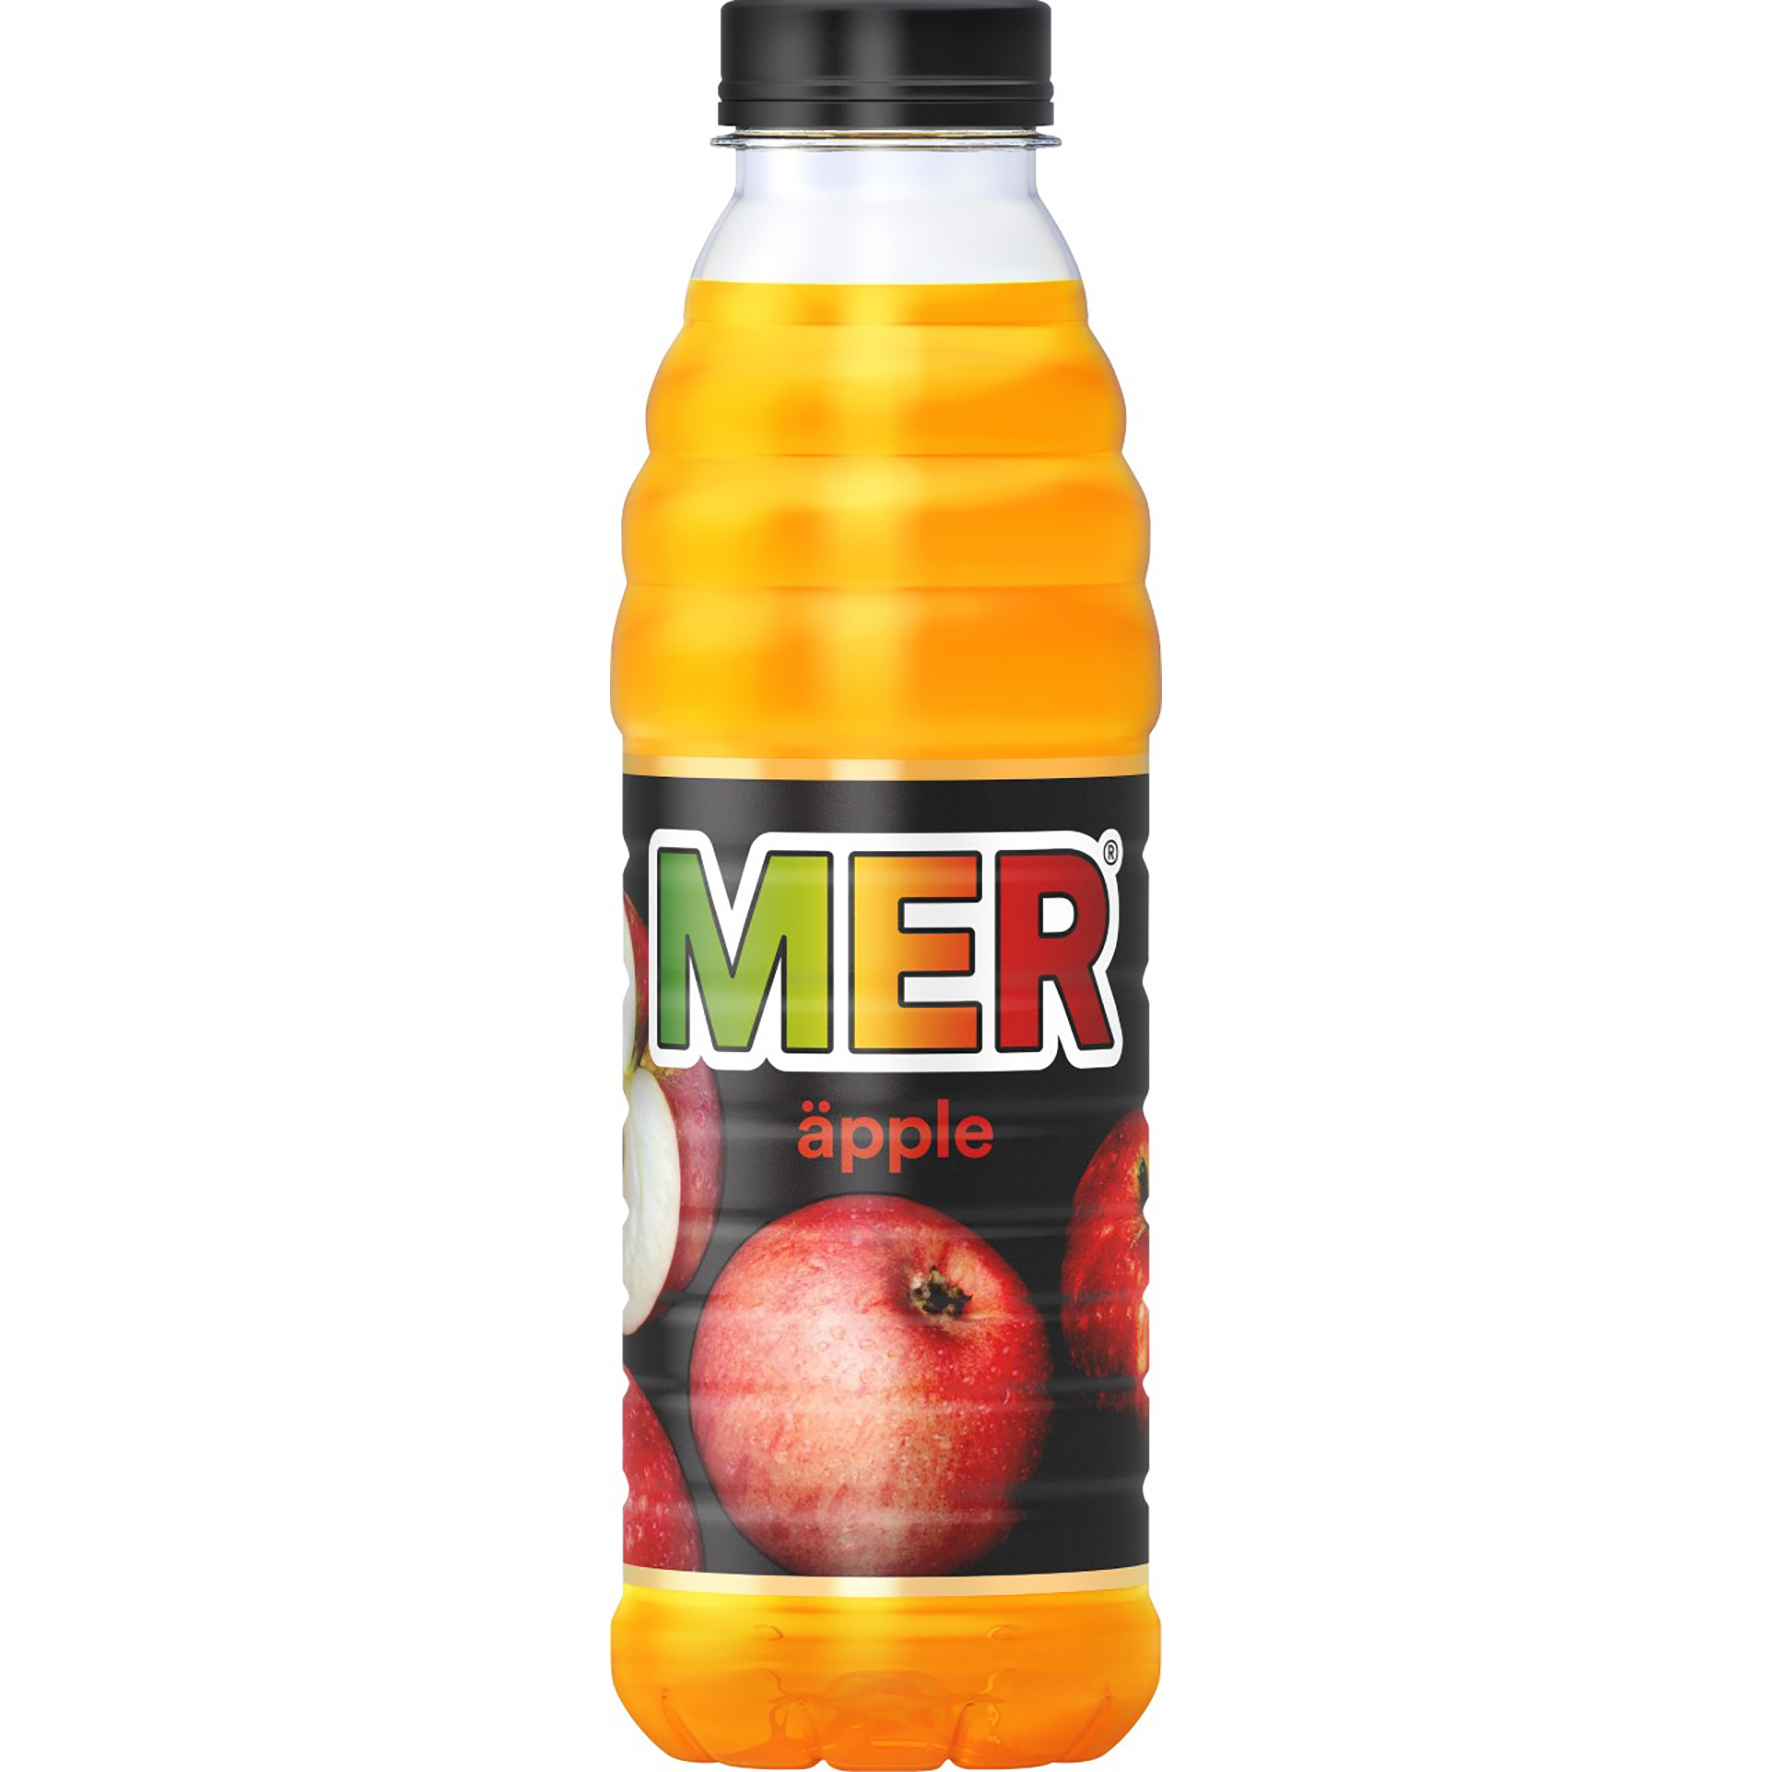 [8557537] MER äpple 500ml PET